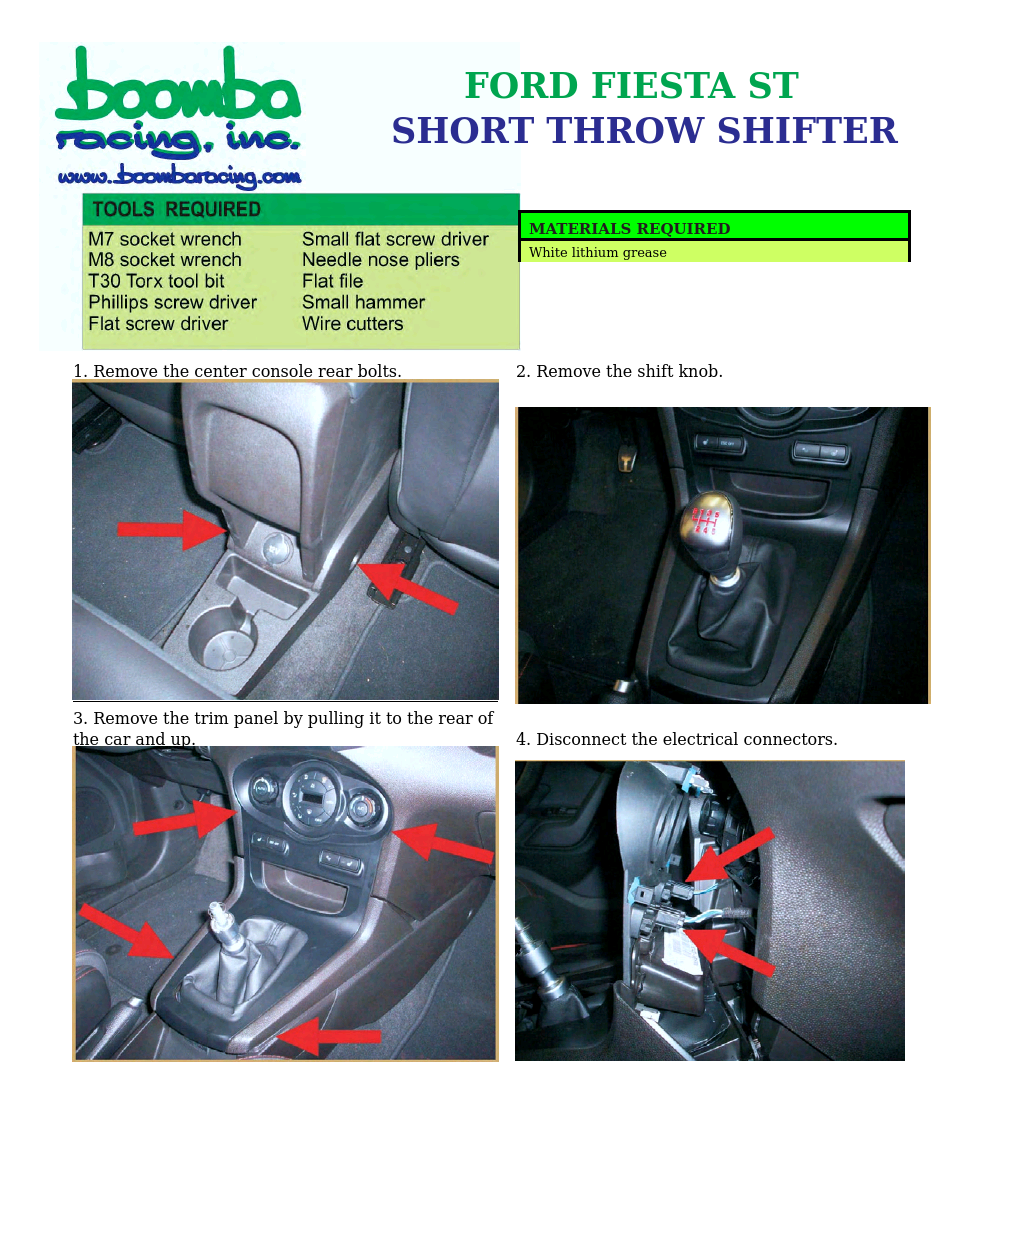 Ford Fiesta ST Short Throw Shifter thanks to westcoaST on Fiesta ST Forum